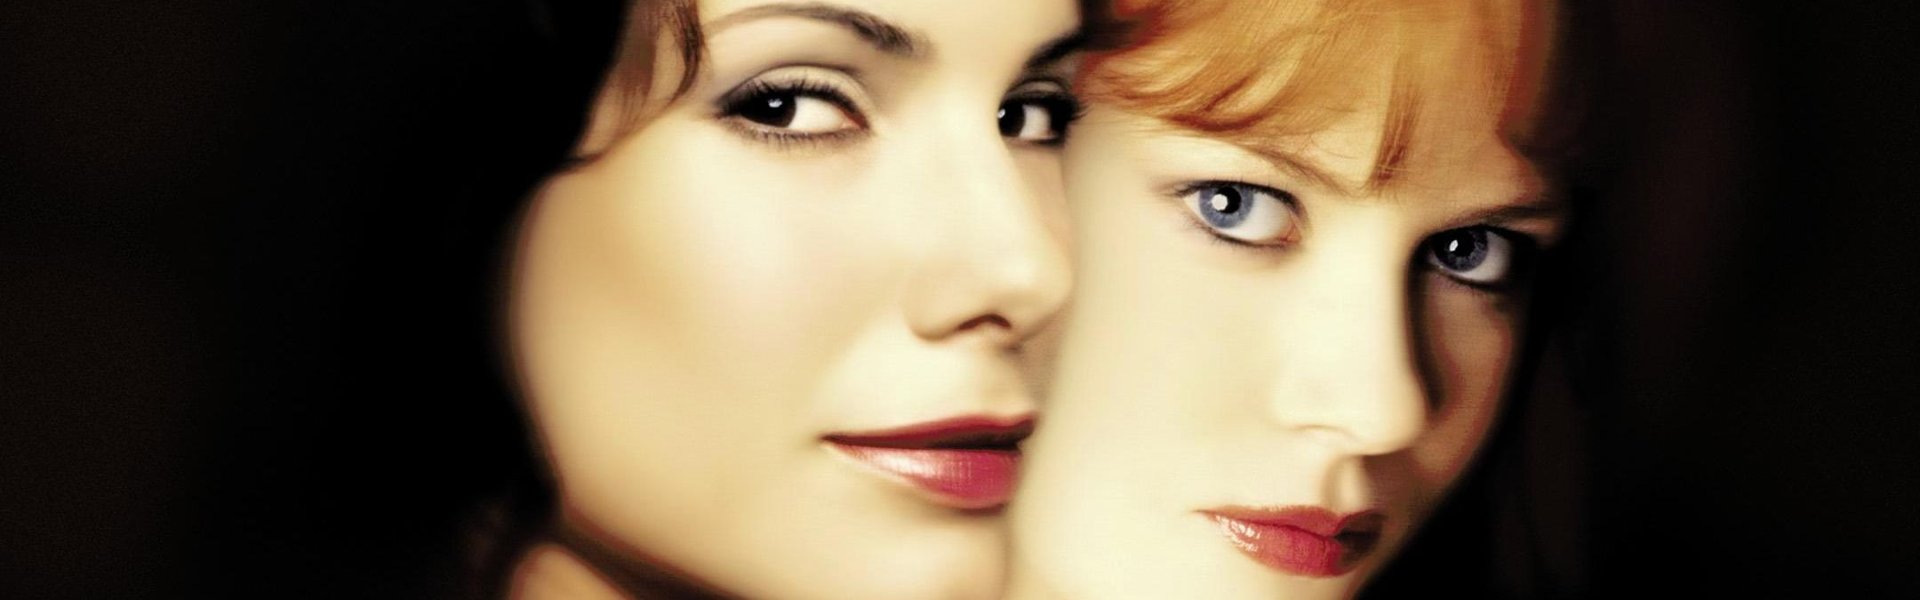 Sandra Bullock and Nicole Kidman in the Sequel to “Practical Magic”